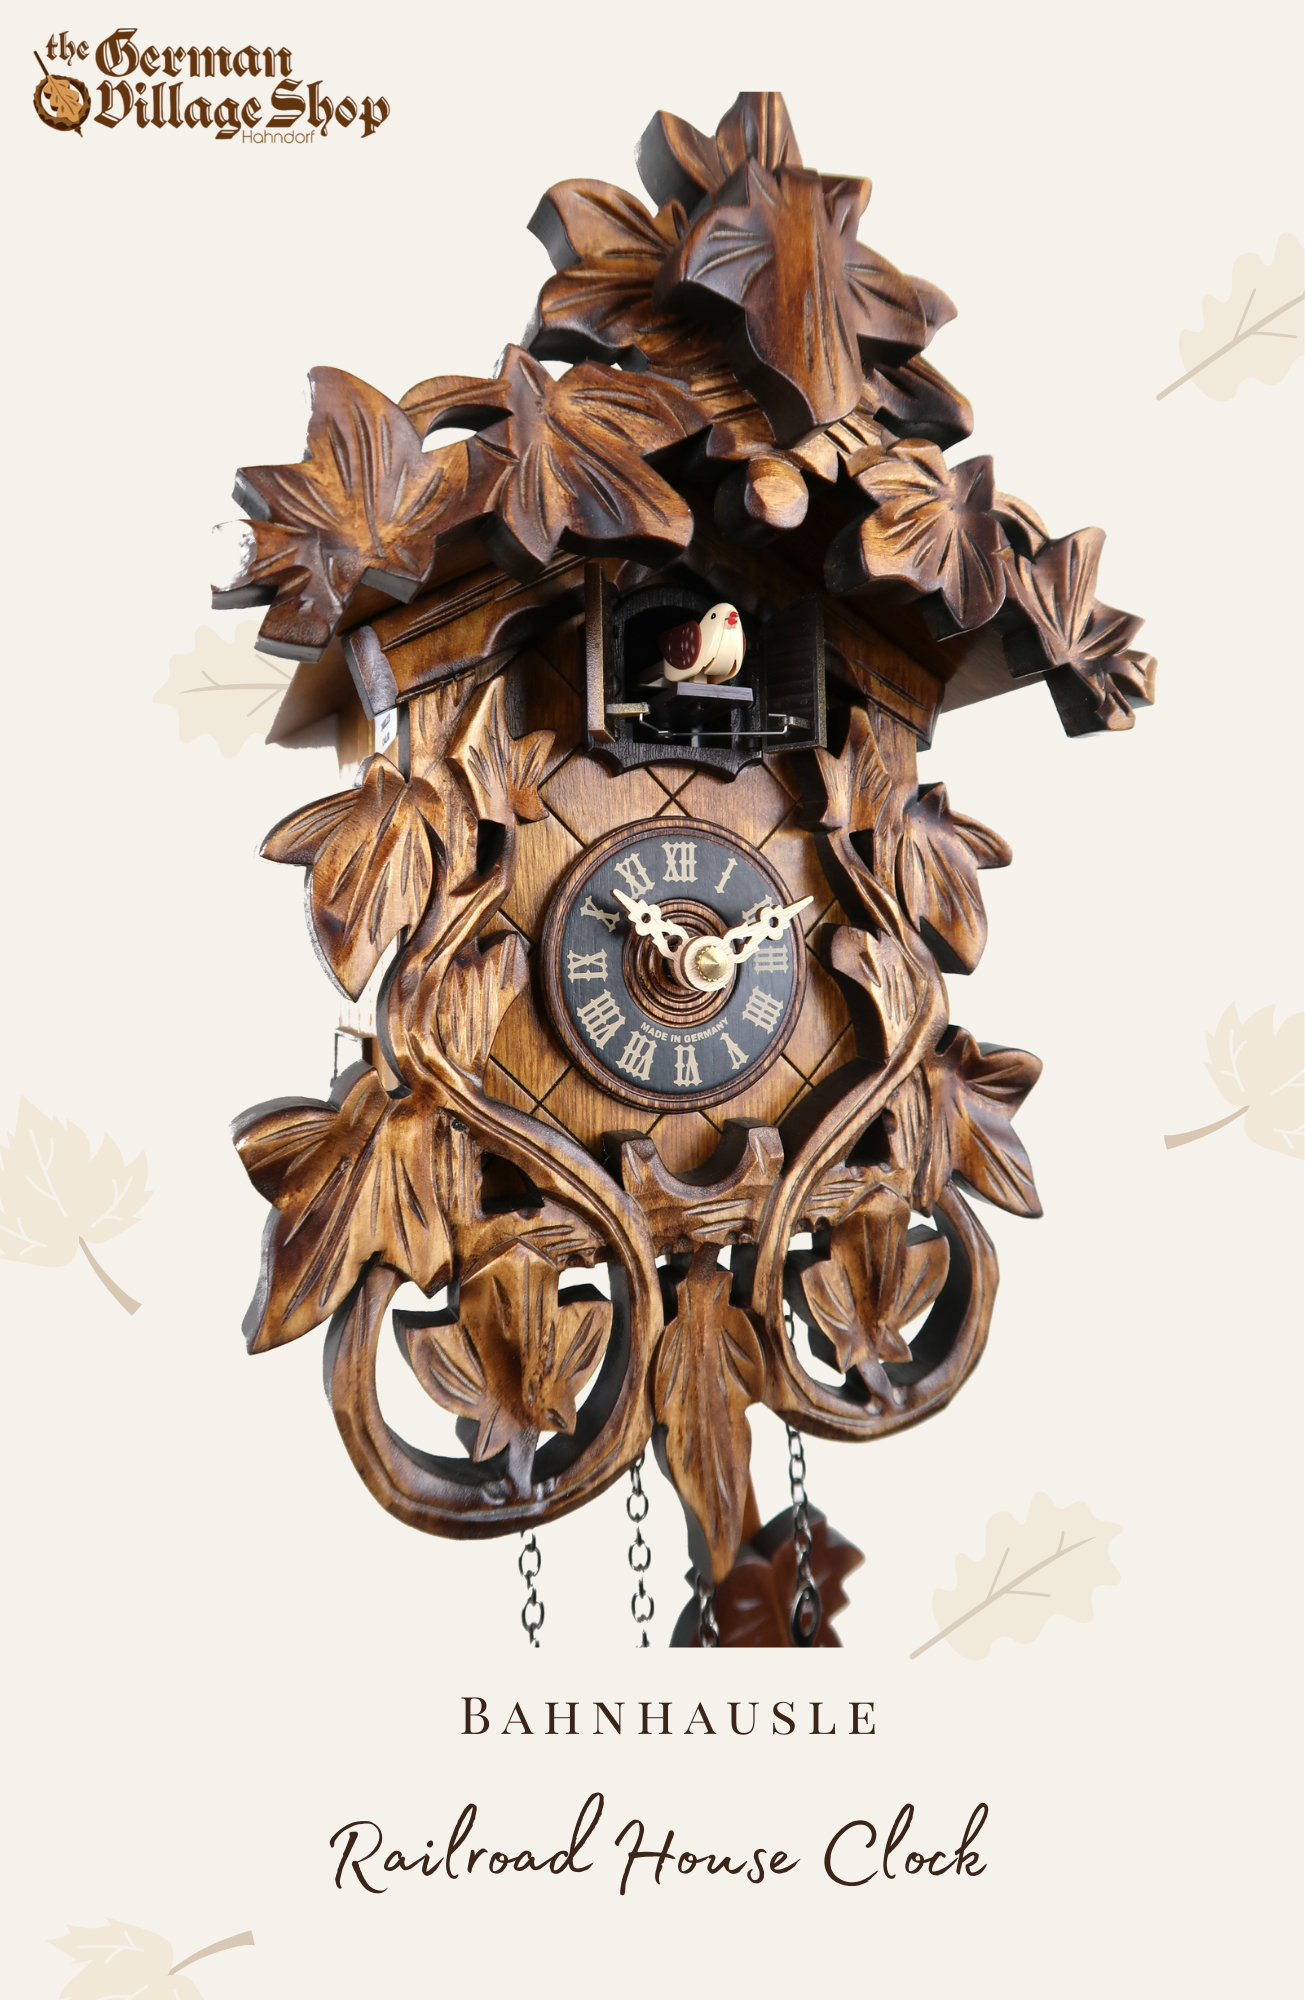 Railroad house clock